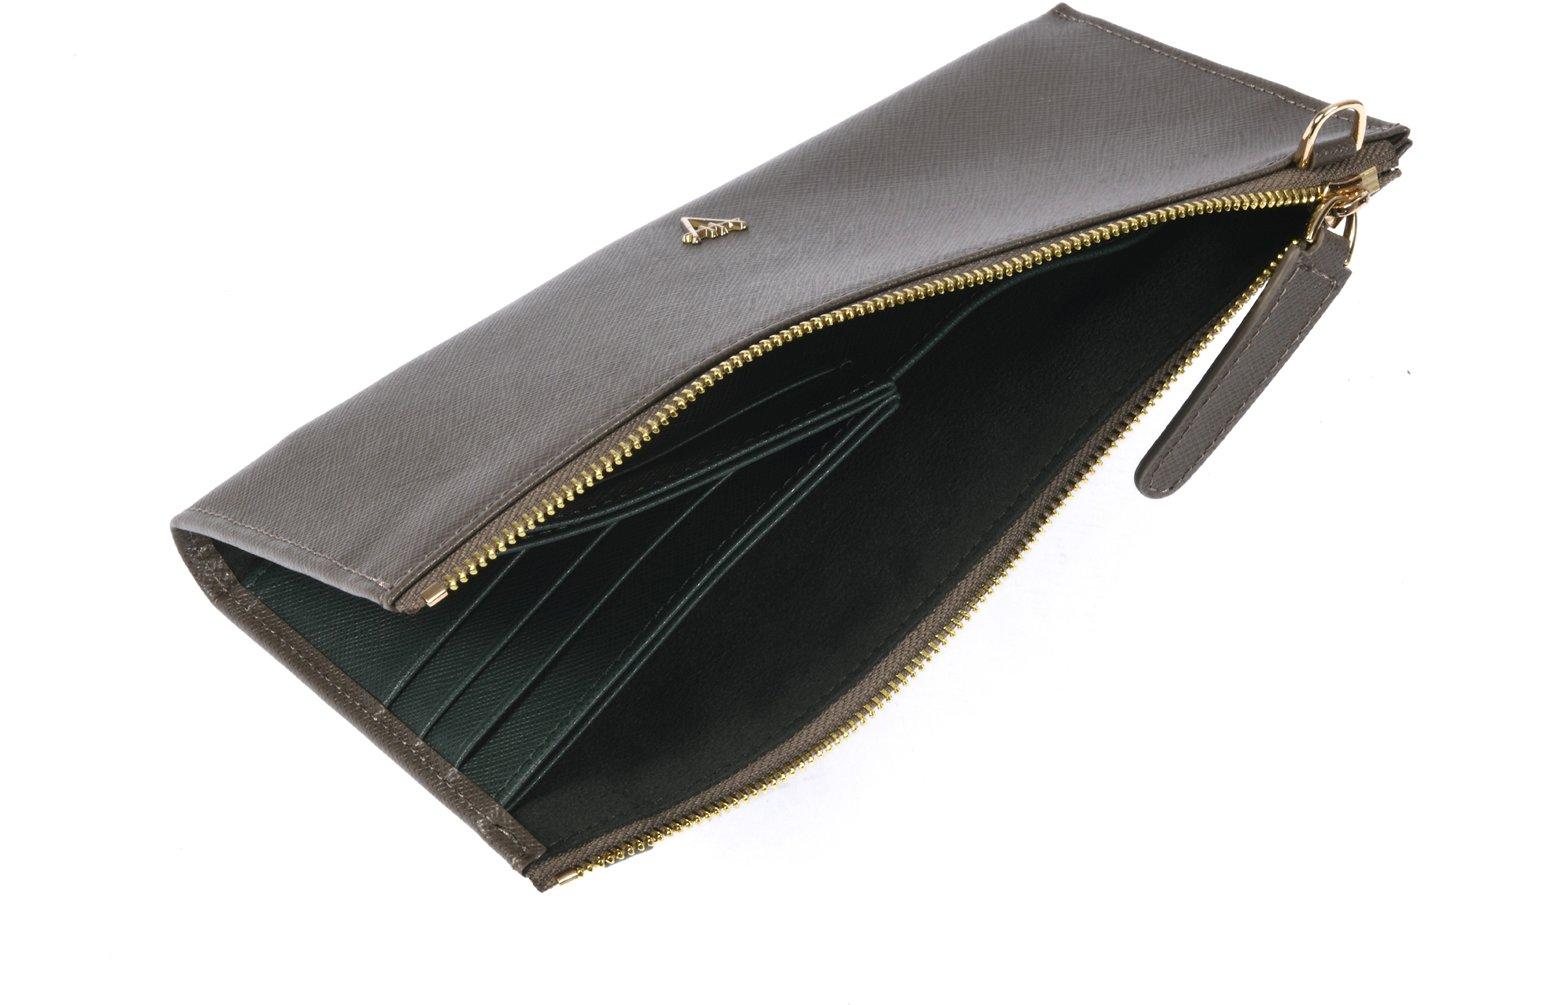 Prada Wallet On Chain Saffiano Leather Black at FORZIERI